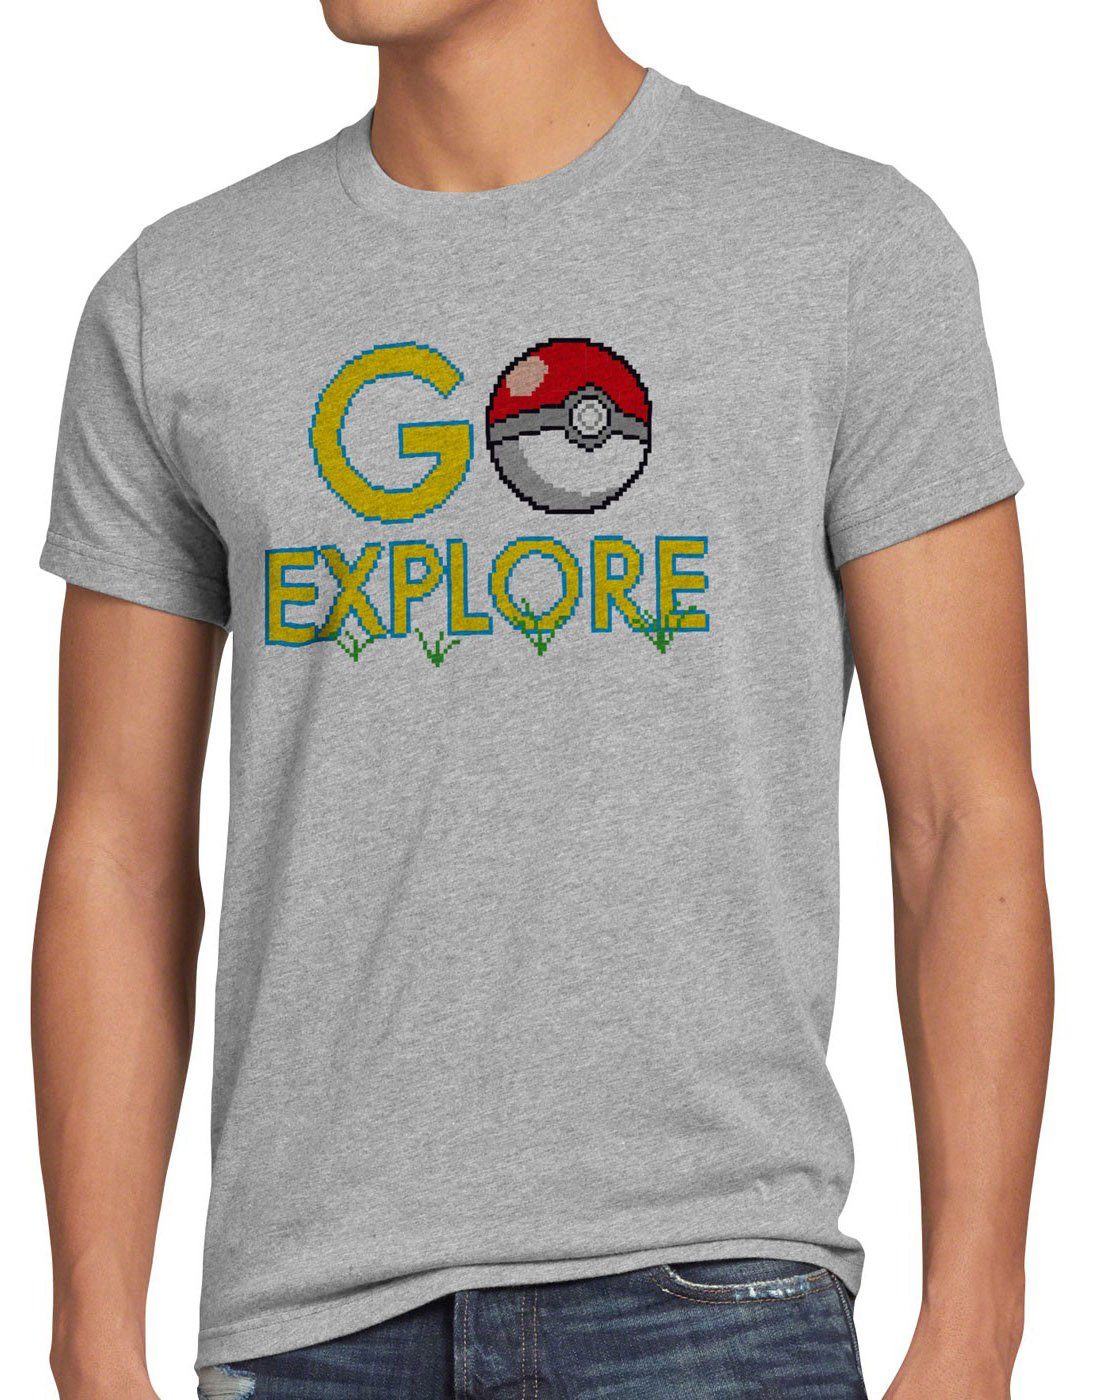 style3 Print-Shirt Herren T-Shirt Go Explore poke game app team pokeball pikachu pokespot arena boy grau meliert